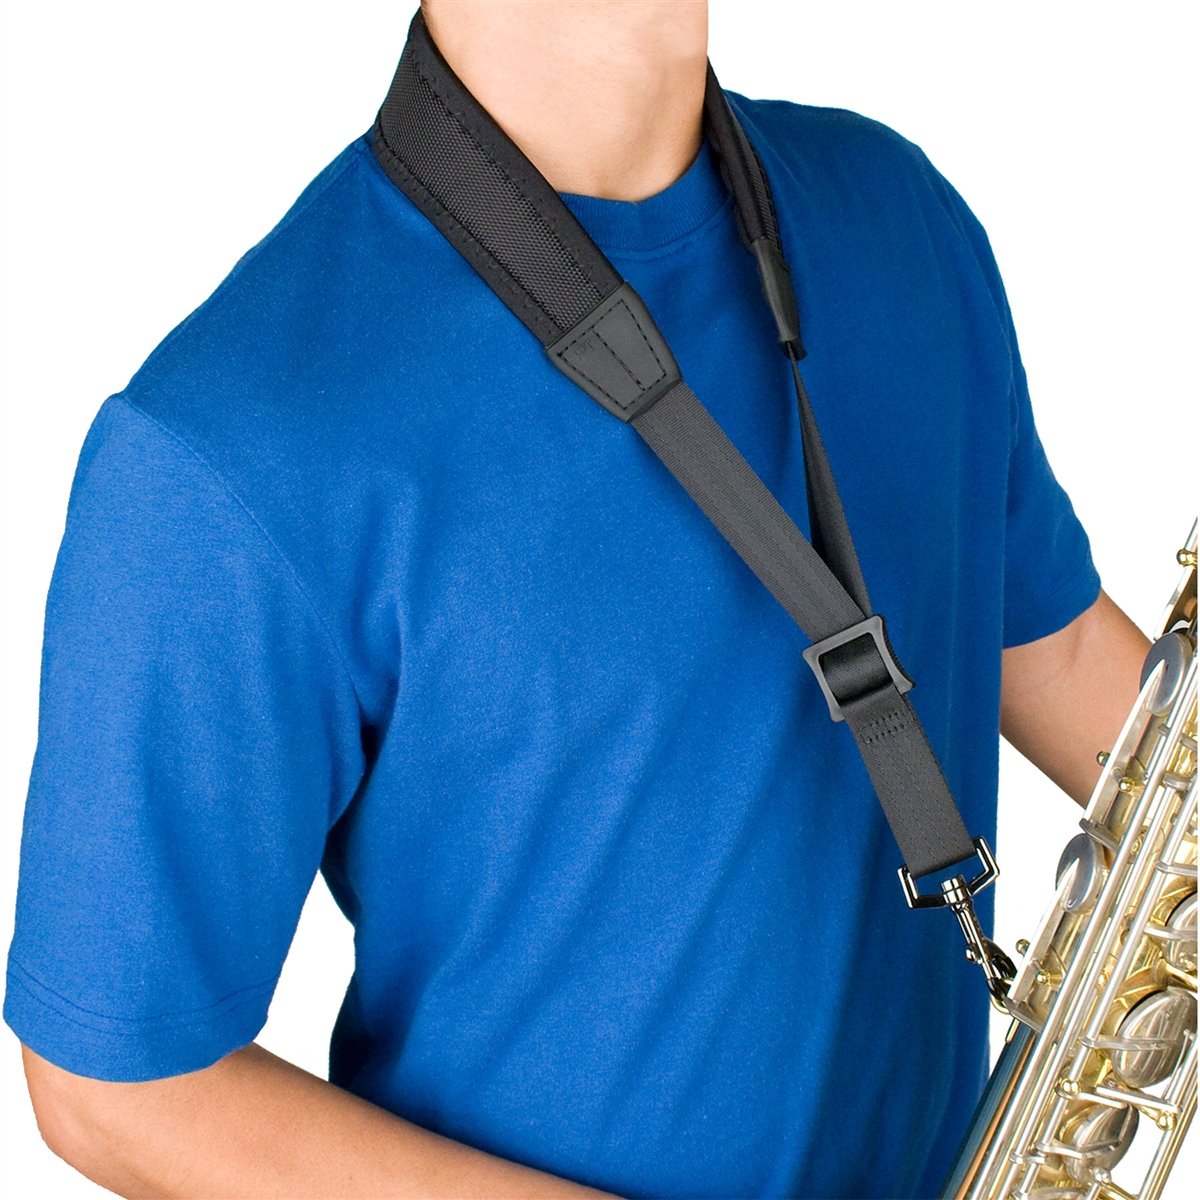 Protec - 24â€³ (Tall) Ballistic Neoprene Less-Stress Saxophone Neck Strap-Accessories-Protec-Music Elements